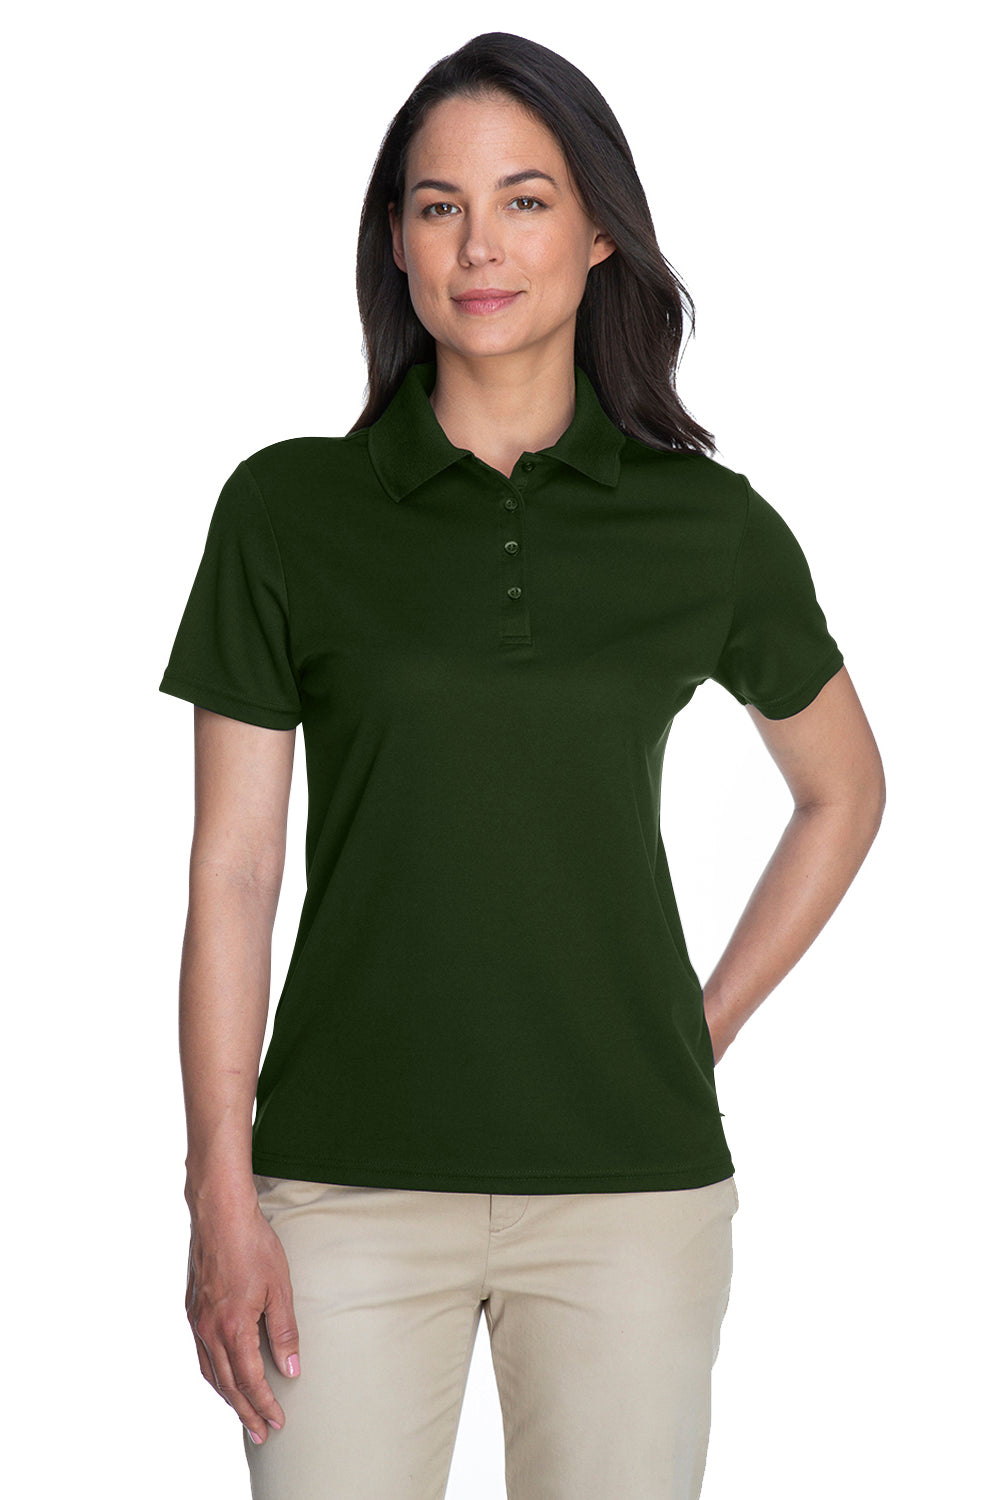 Core 365 78181 Womens Origin Performance Moisture Wicking Short Sleeve Polo Shirt Forest Green Front